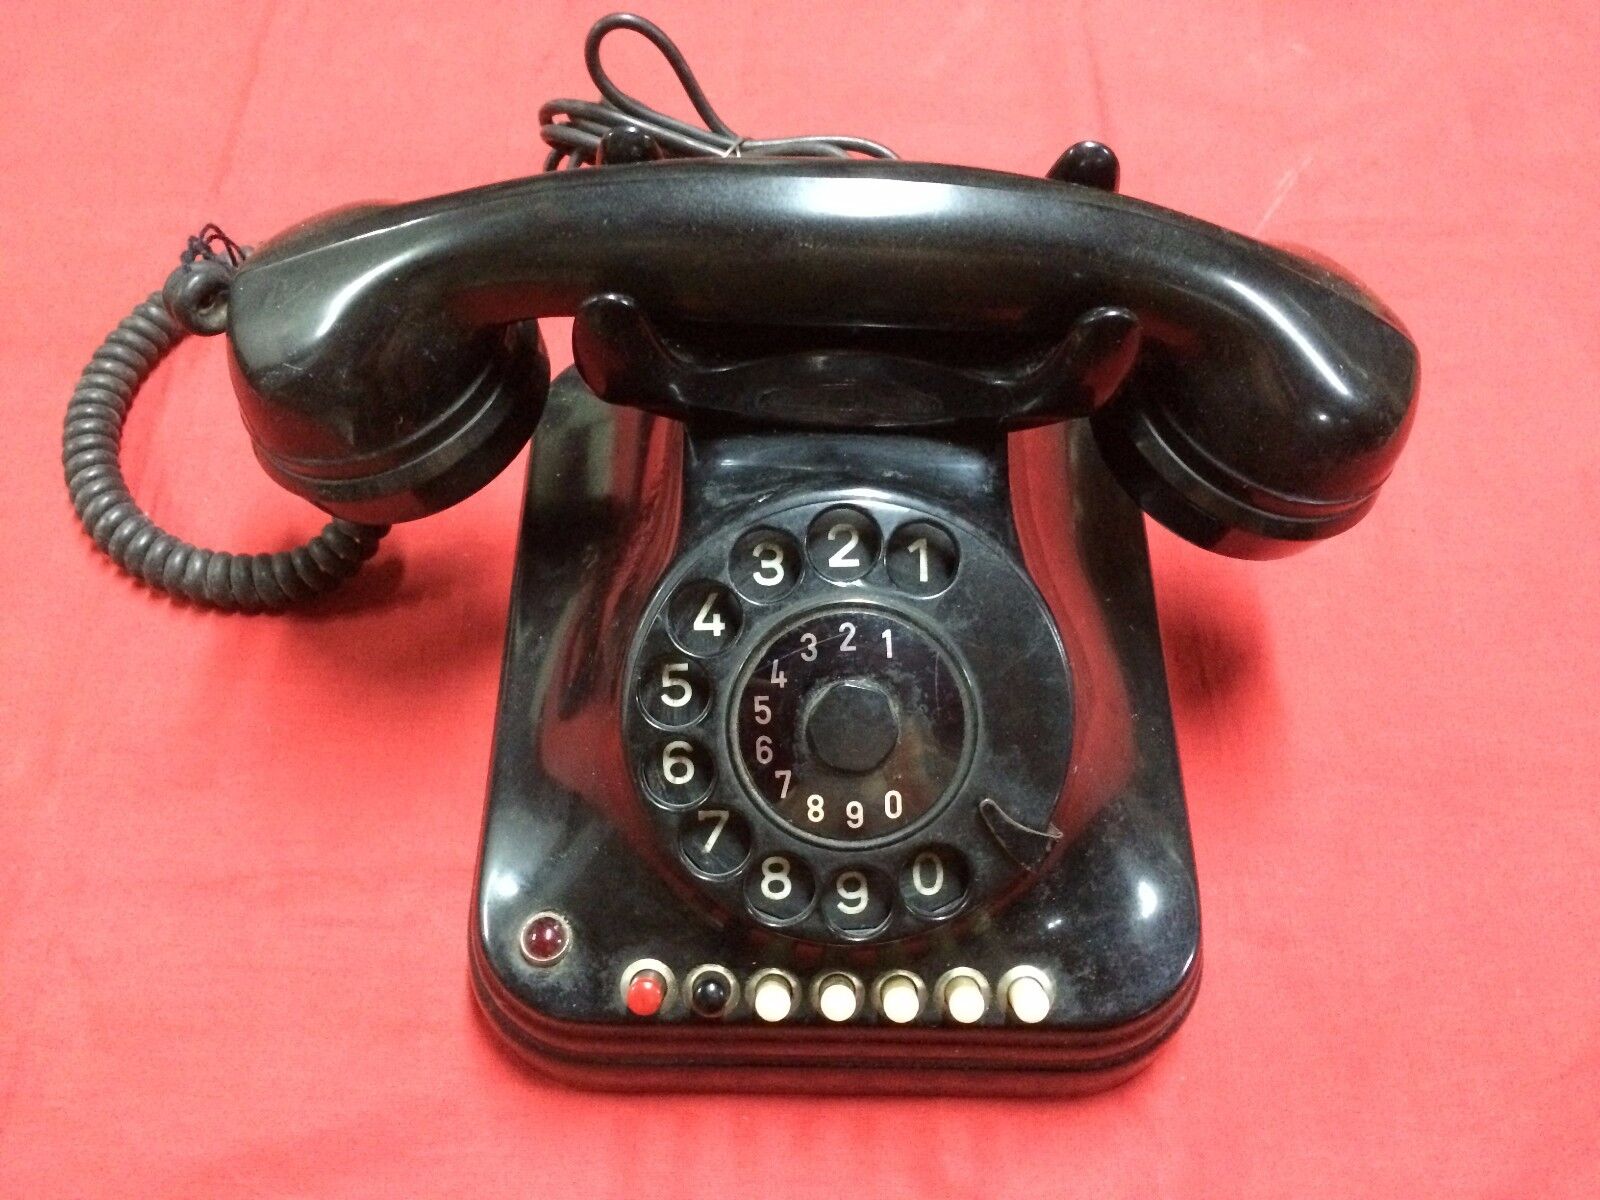 RARE FAMOUS PUPIN BAKELITE TELEPHONE MANUAL ANTIQUE PHONE WW2 WW1 SUPER RARE